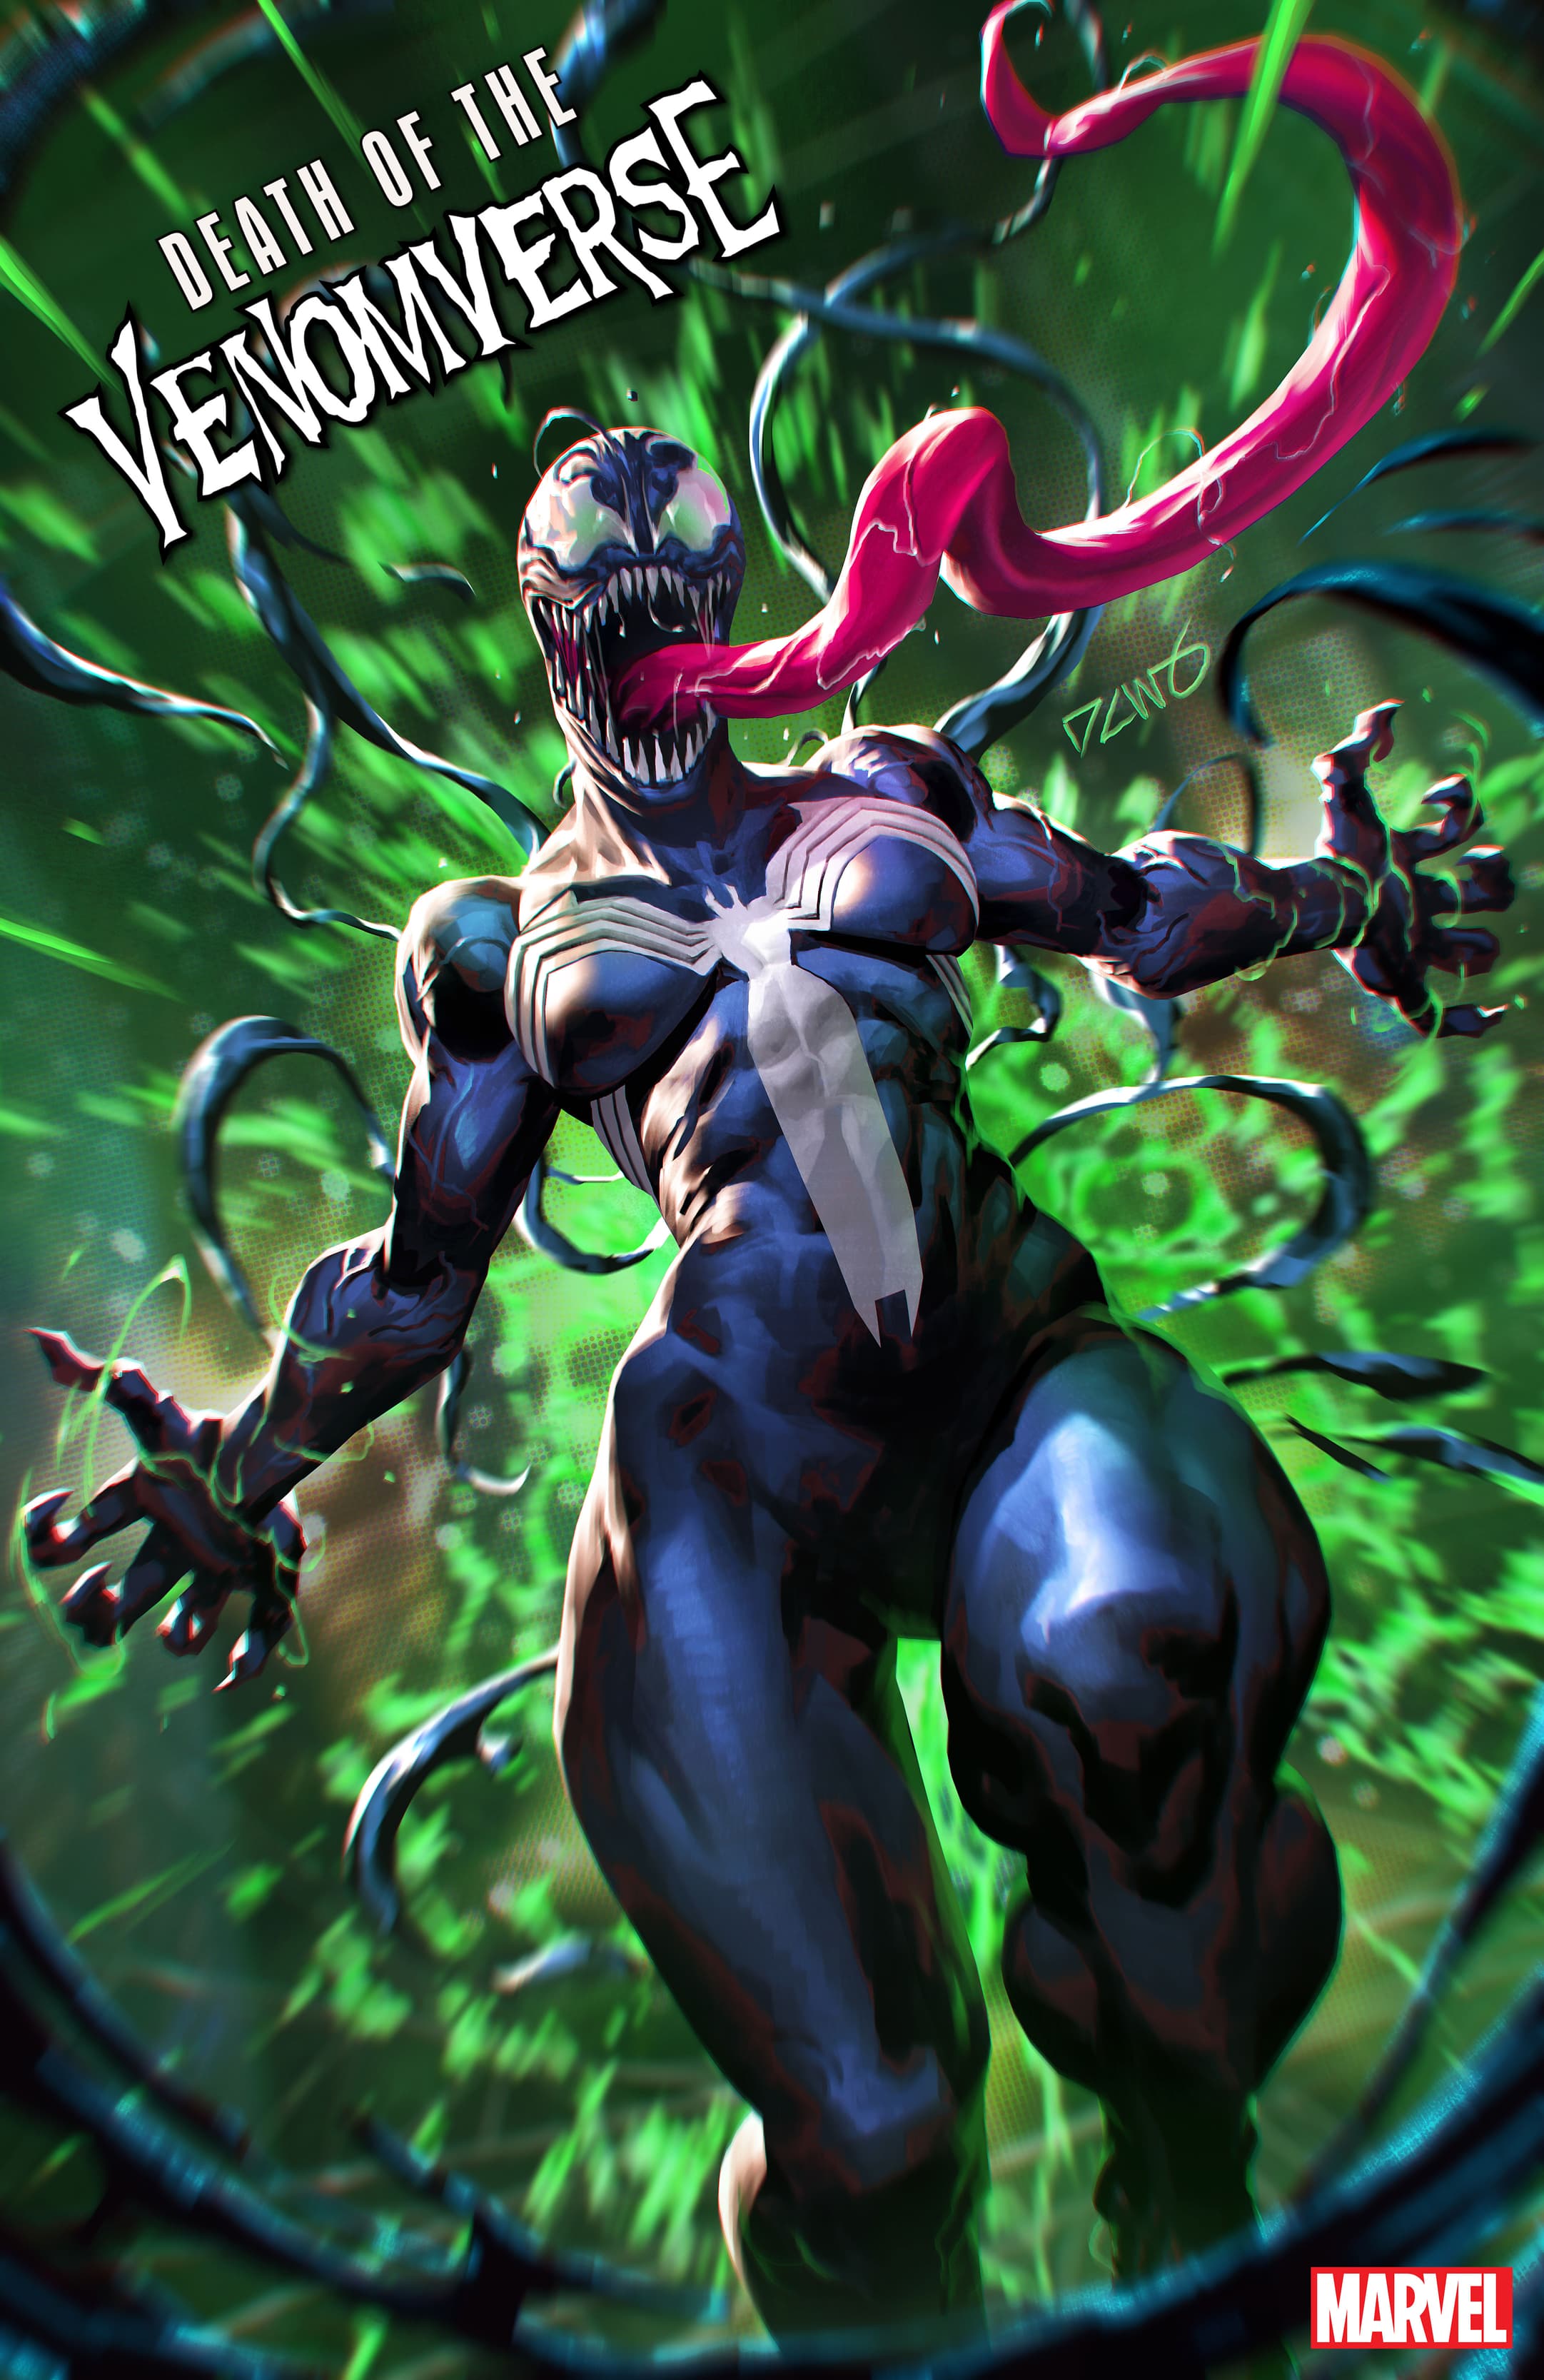 She venom